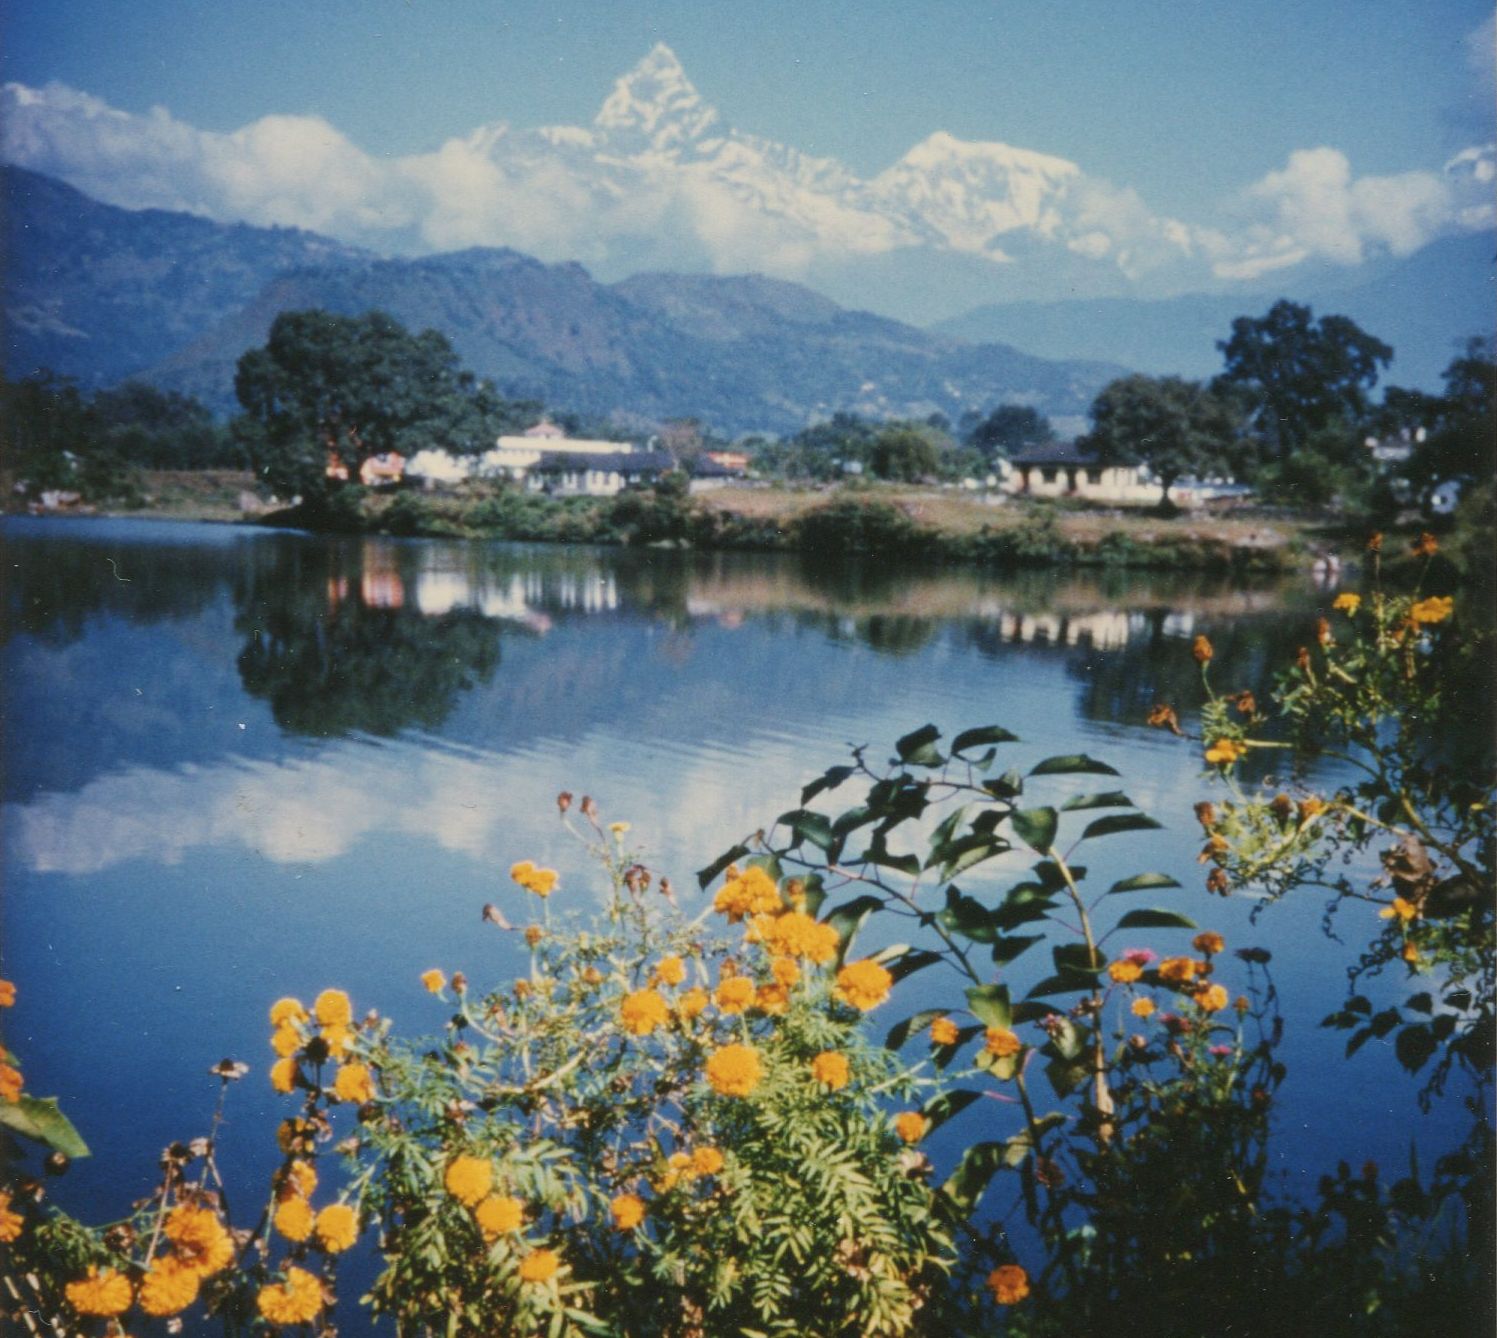 Macchapucchre ( Fishtail Mountain  from Phewa Tal in Pokhara